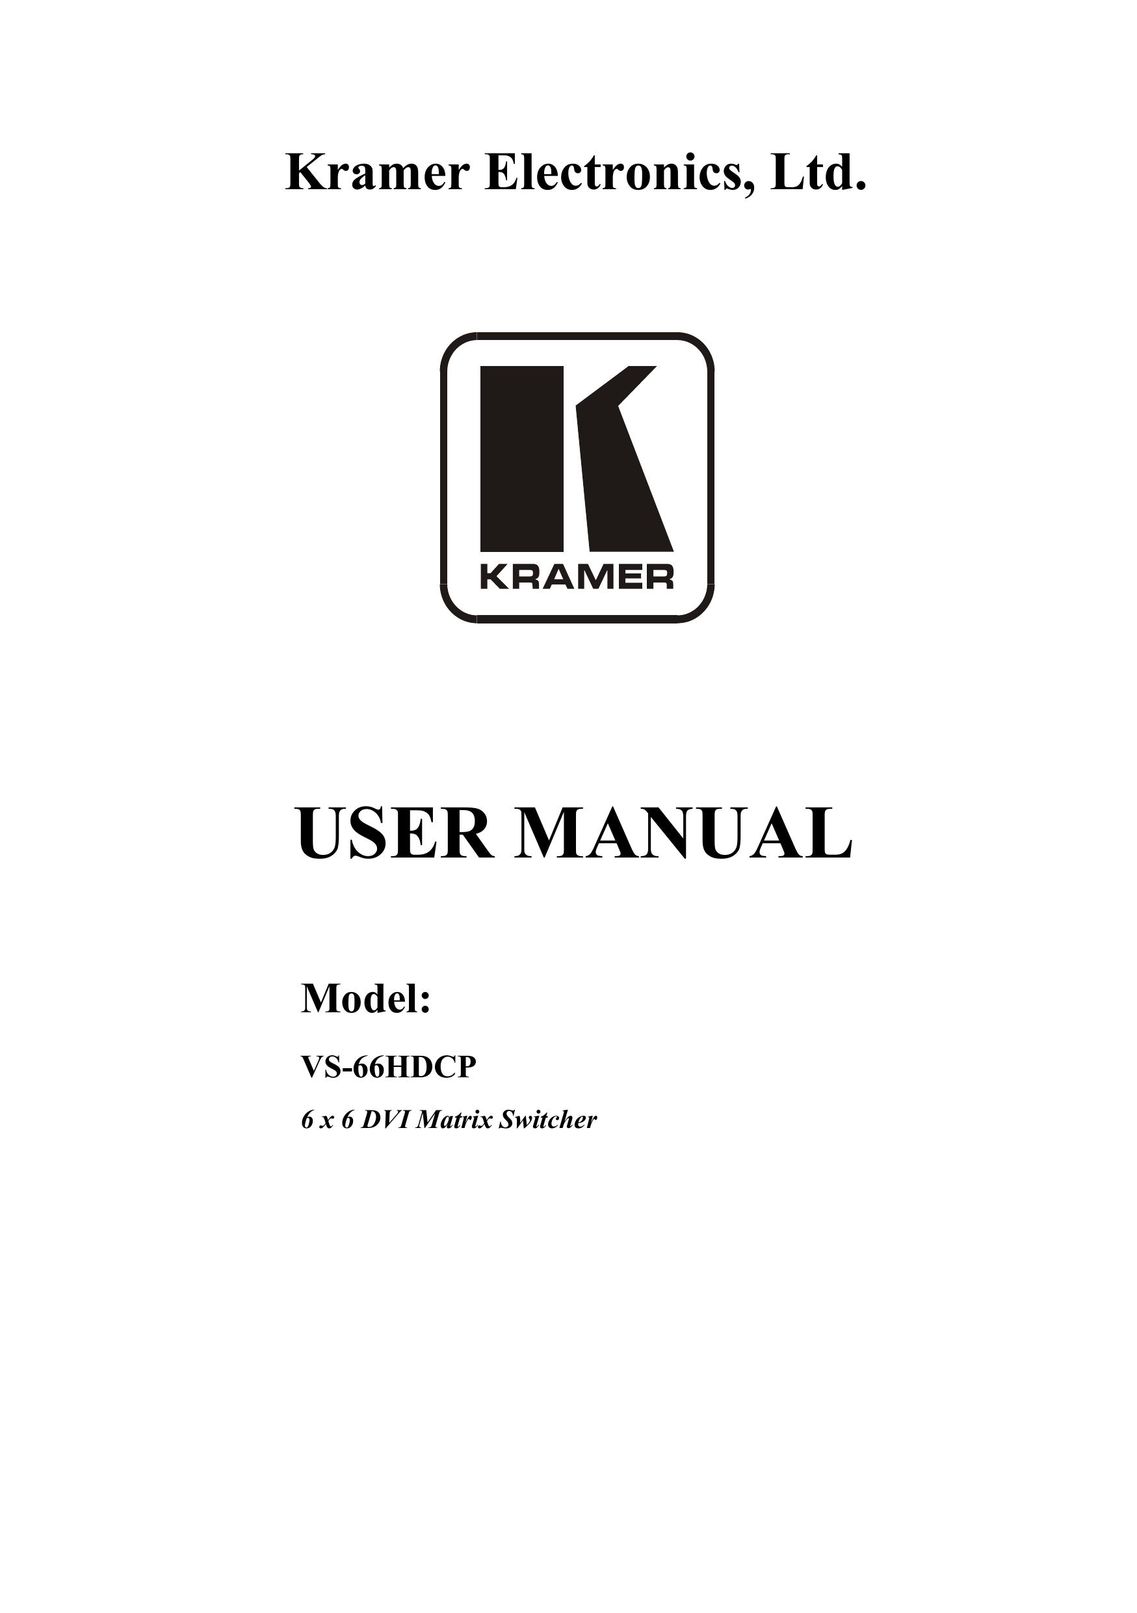 Kramer Electronics VS-66hdcp Switch User Manual